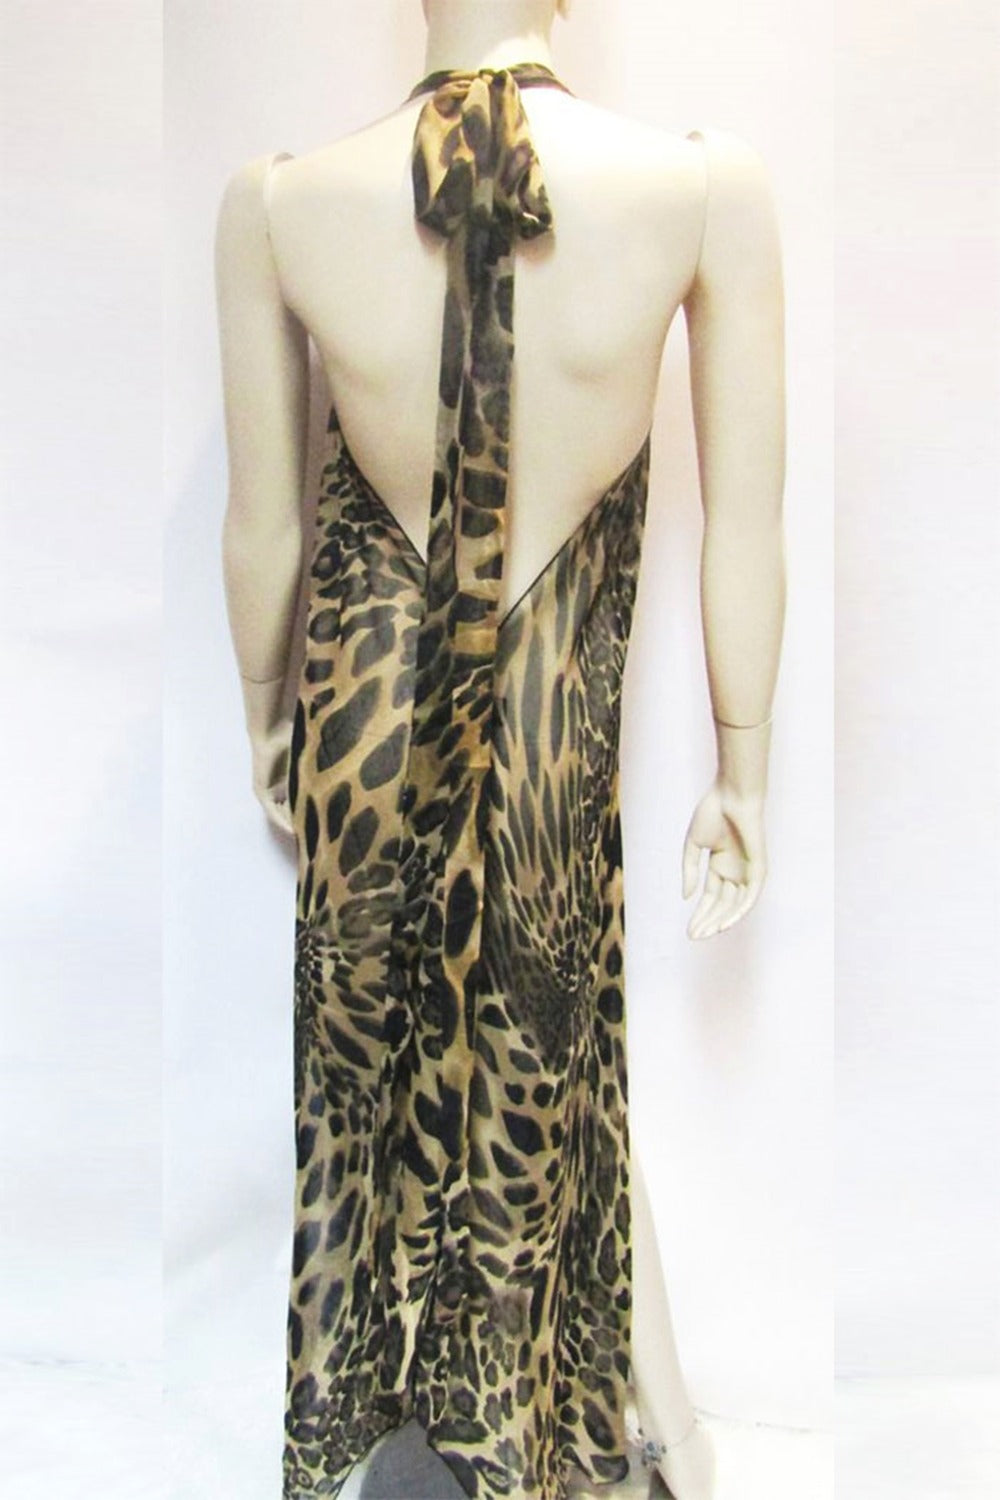 Sheer Halter Coverup/Dress in Leopard